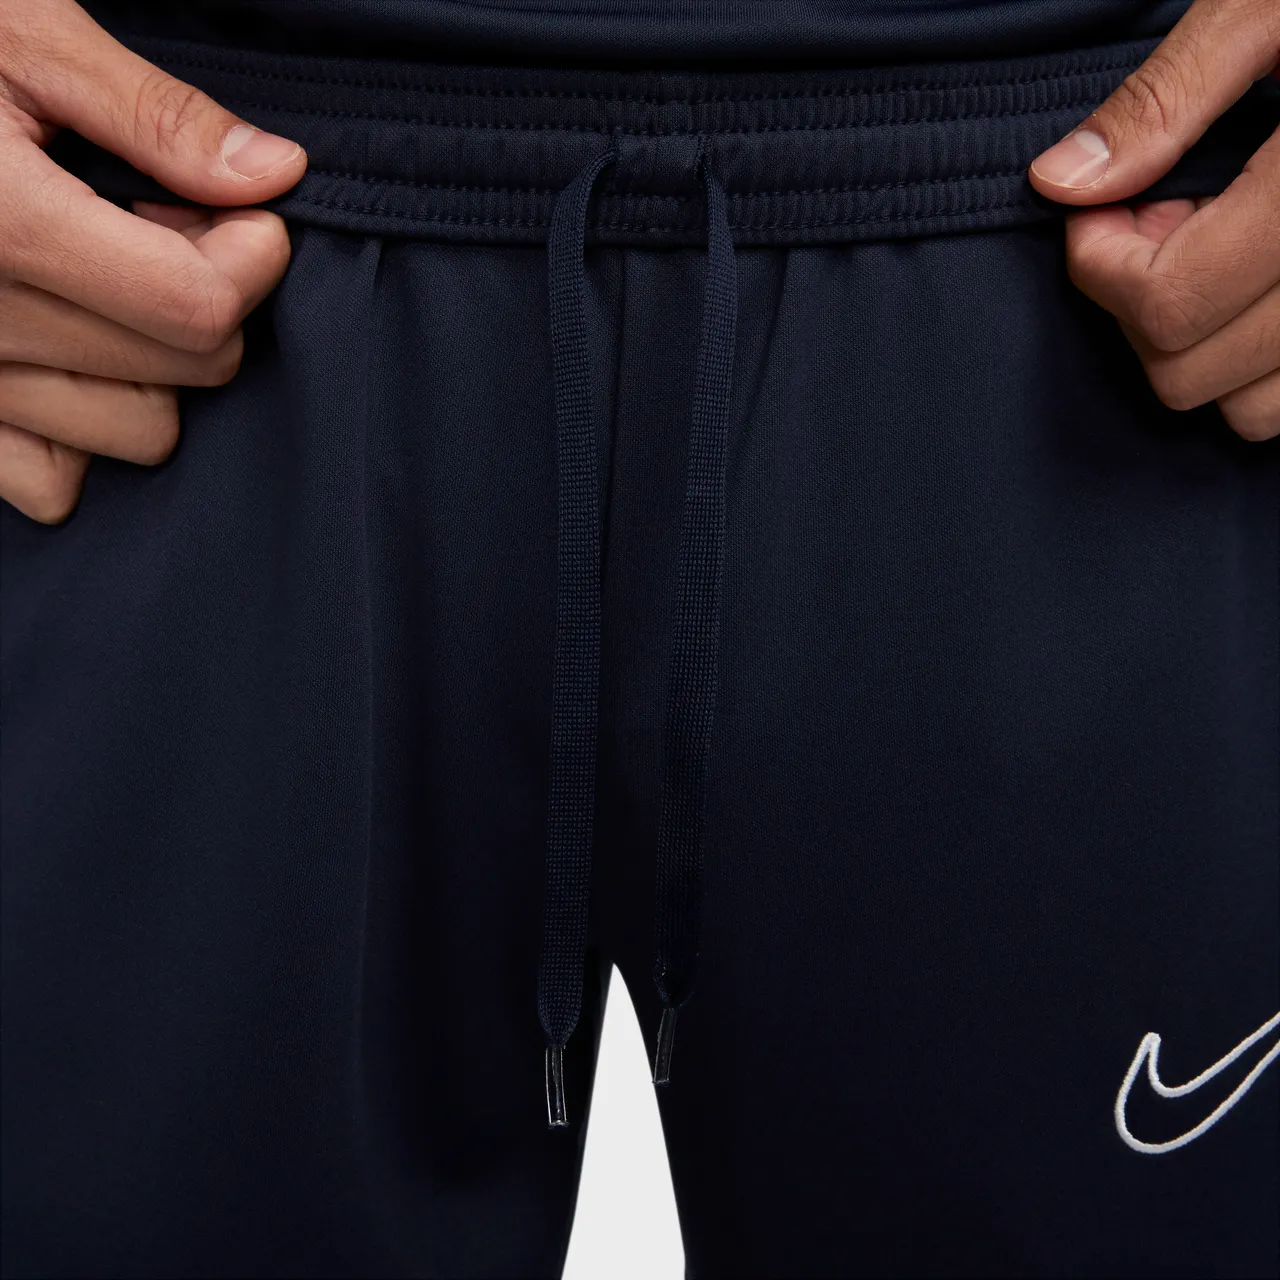 Nike Dri-FIT Academy Men's Dri-FIT Football Pants - Blue - Polyester